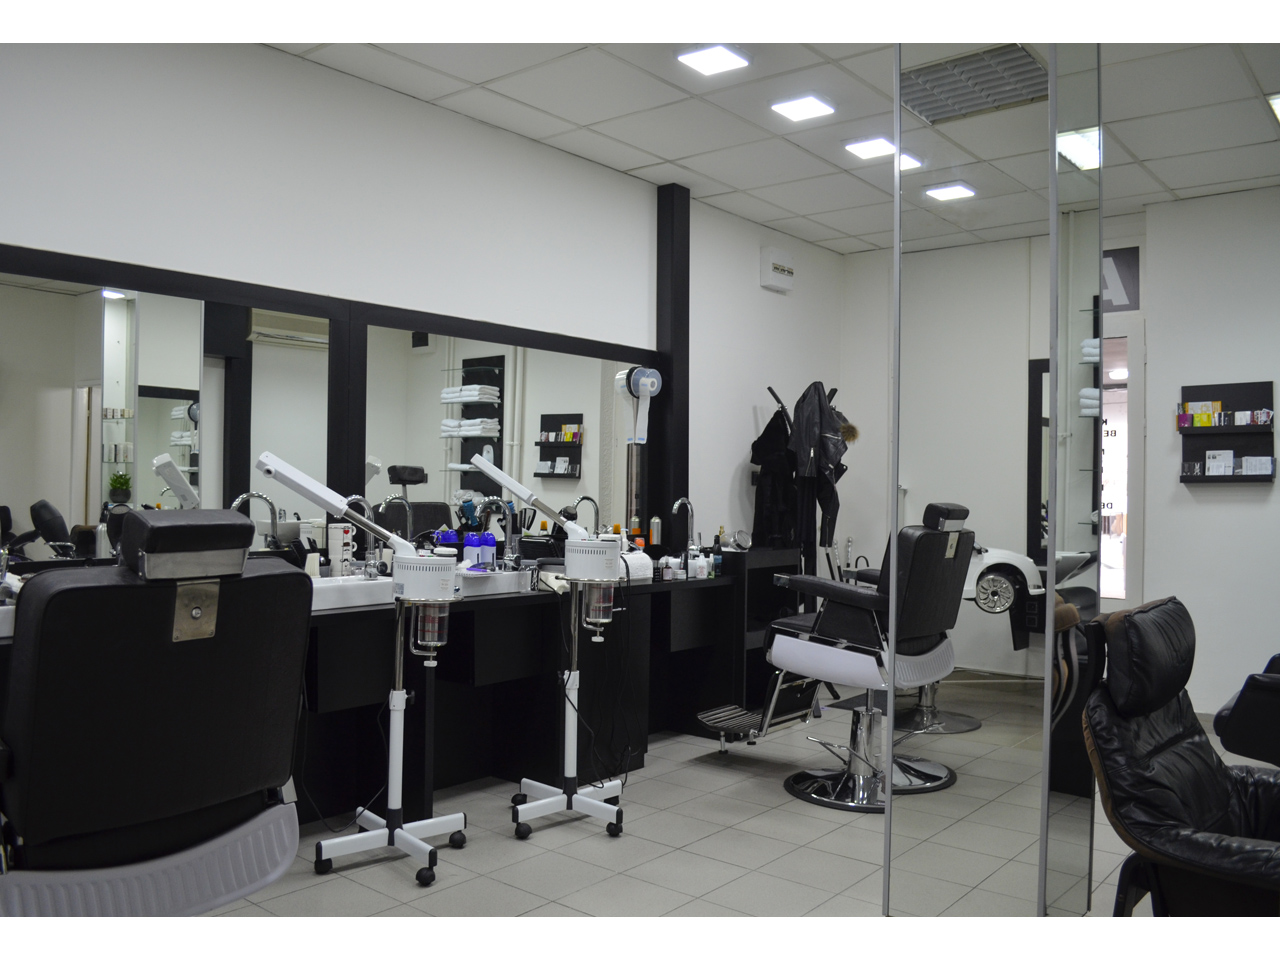 GROFF PLUS STUDIO Hairdressers Beograd